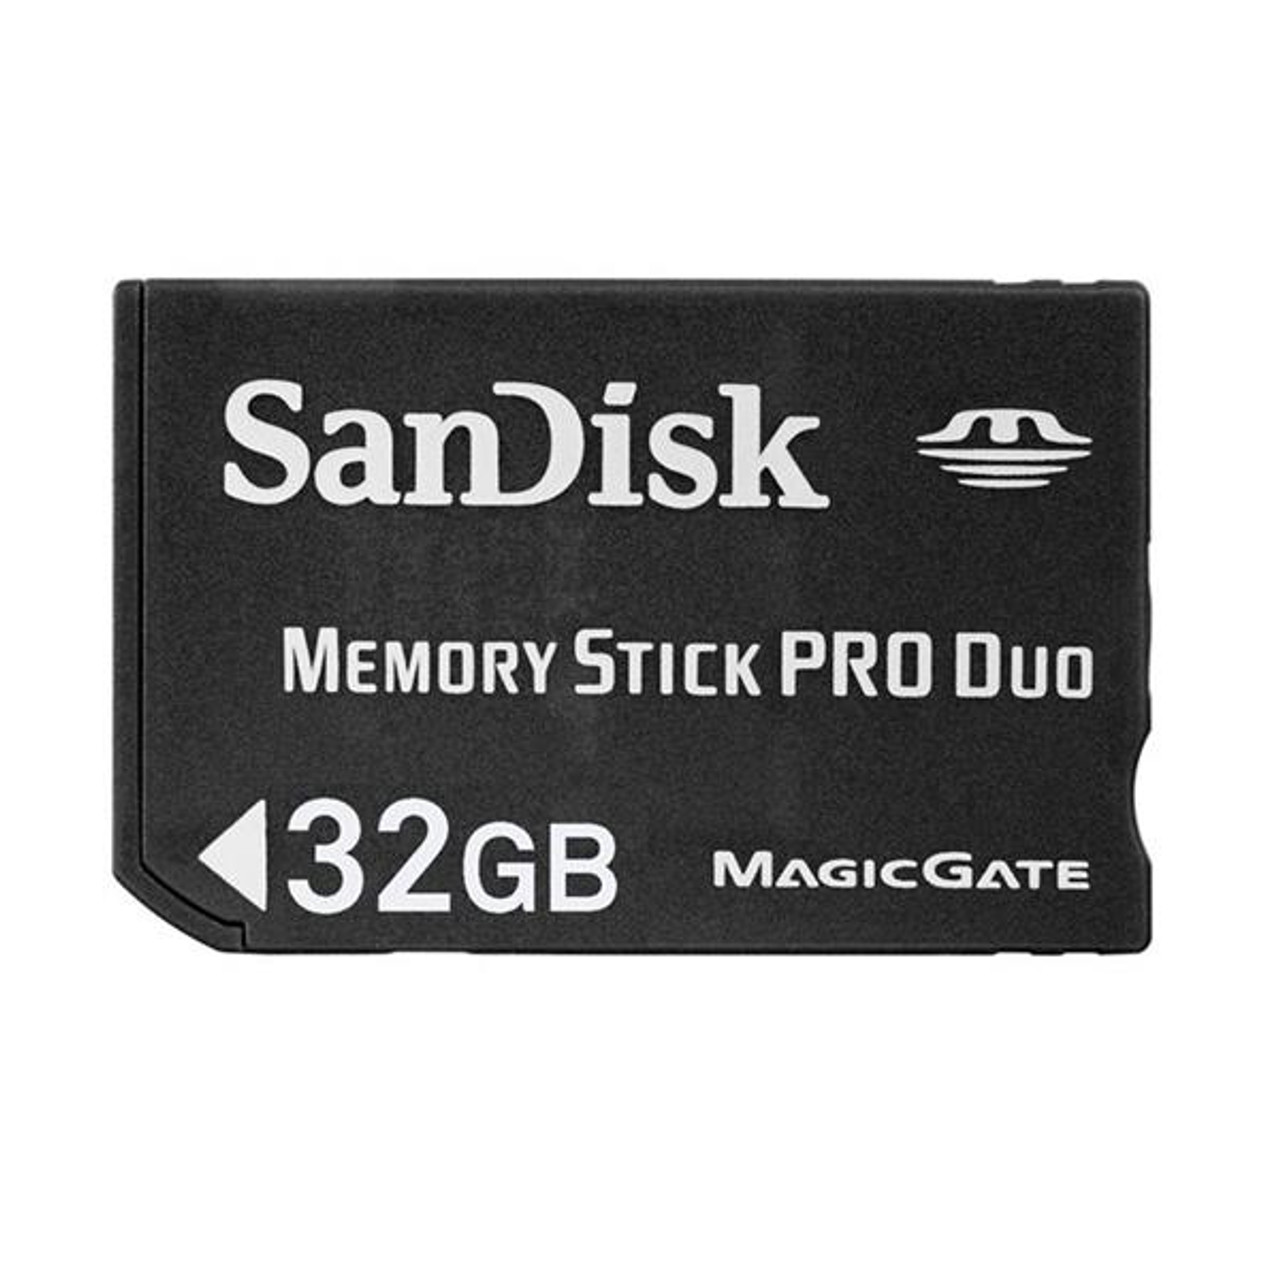 SDMSPD-032G-A46 SanDisk 32GB Memory Stick PRO Duo